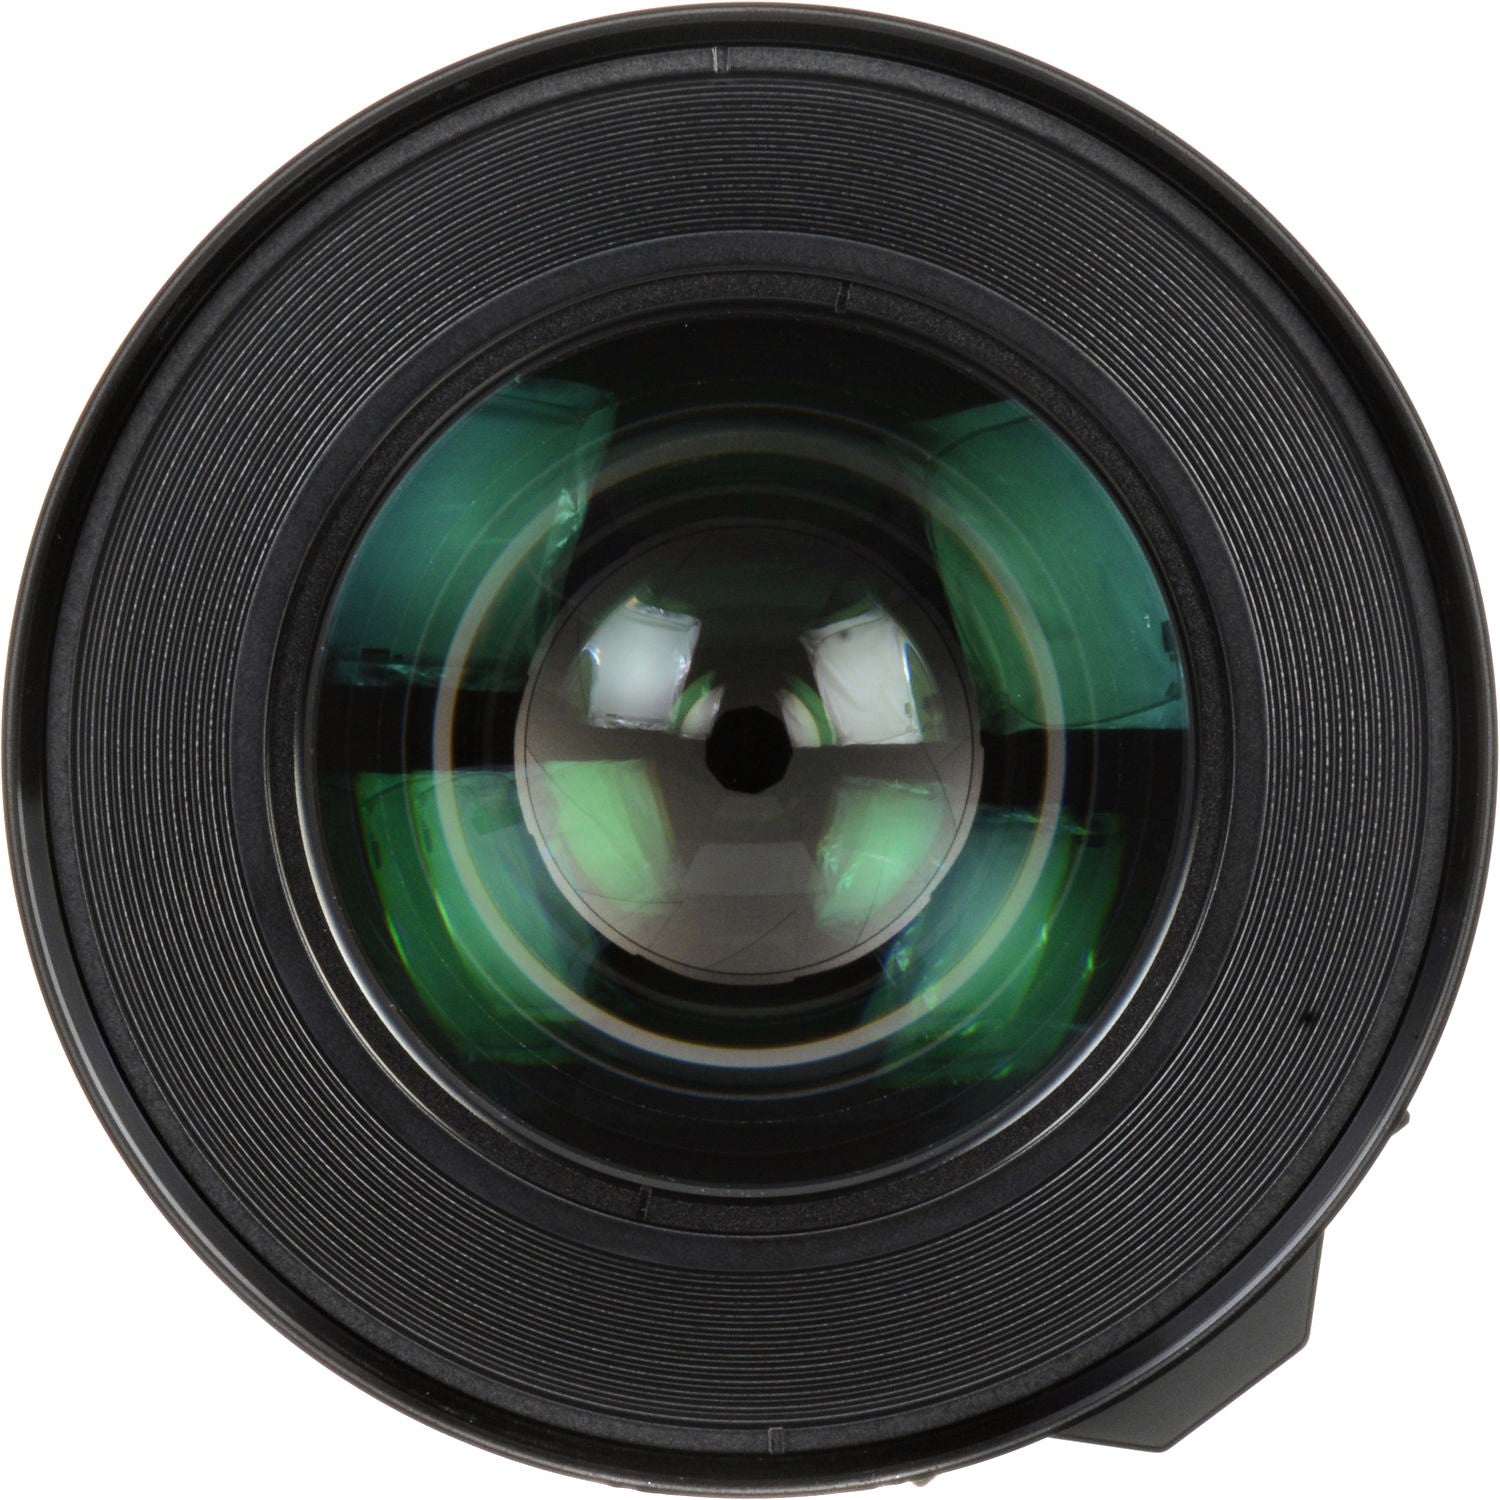 Tokina 50mm T1.5 Cinema Vista Prime Lens (PL Mount) in a Front Close-Up View